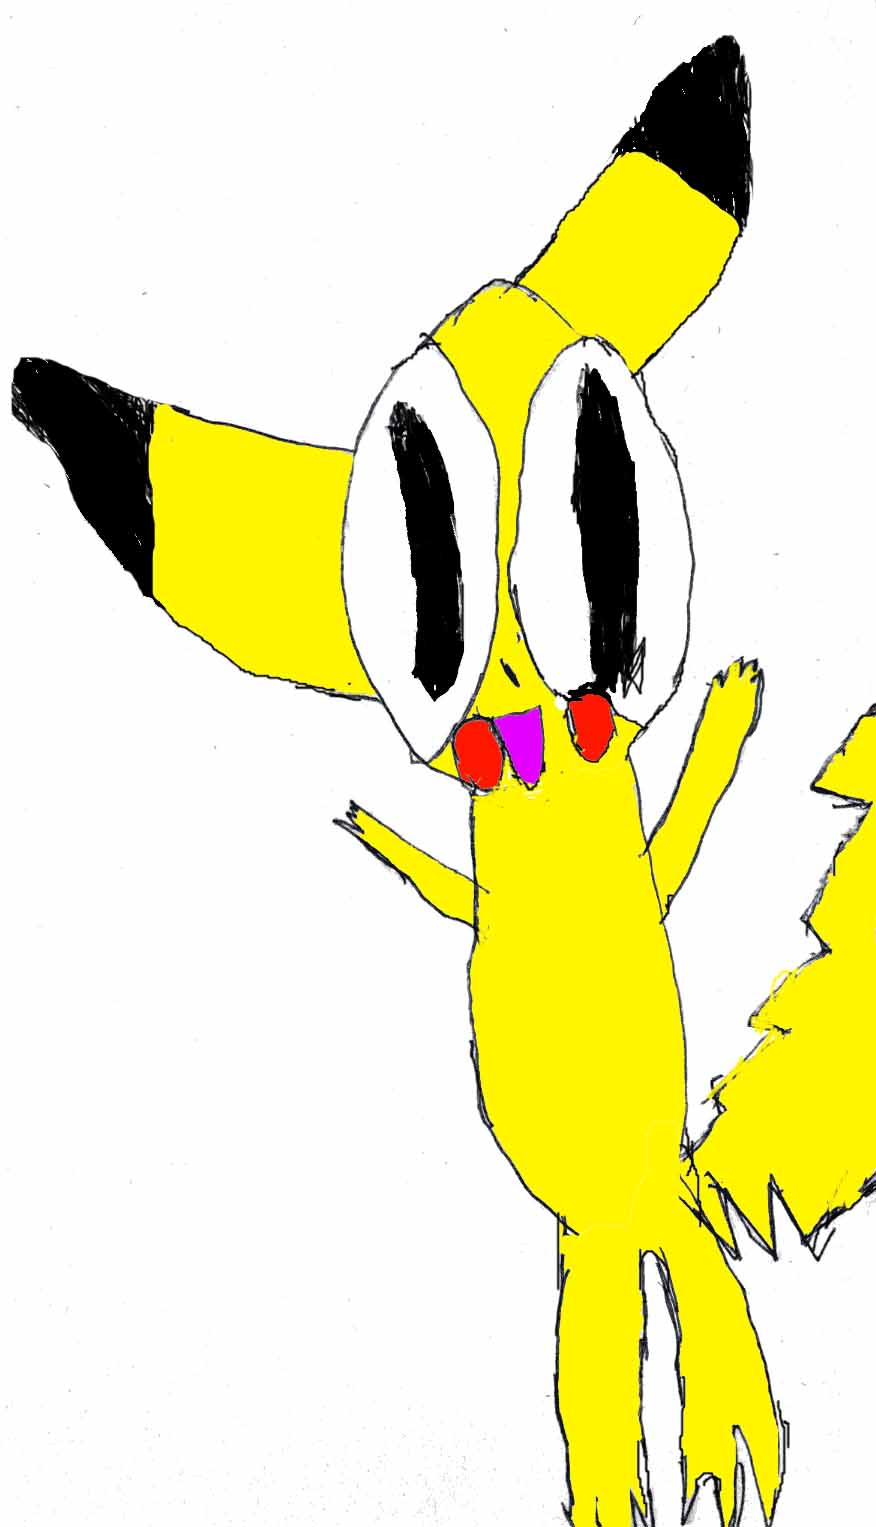 pikachu by artperson